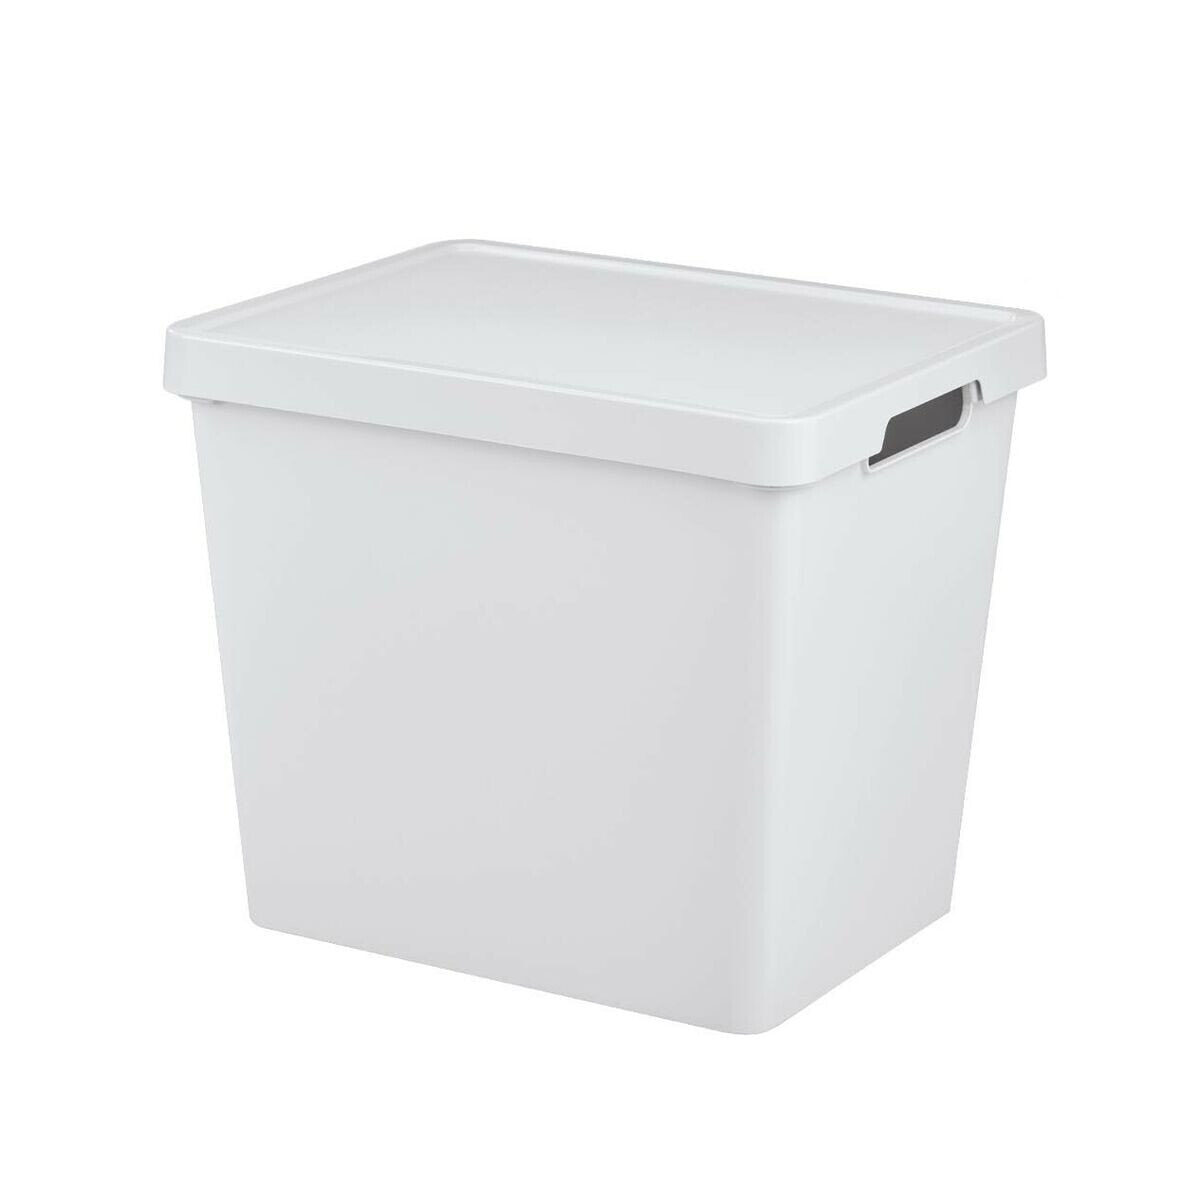 Storage Box with Lid Tontarelli Maya White 23,9 L 36 x 28 x 31,1 cm